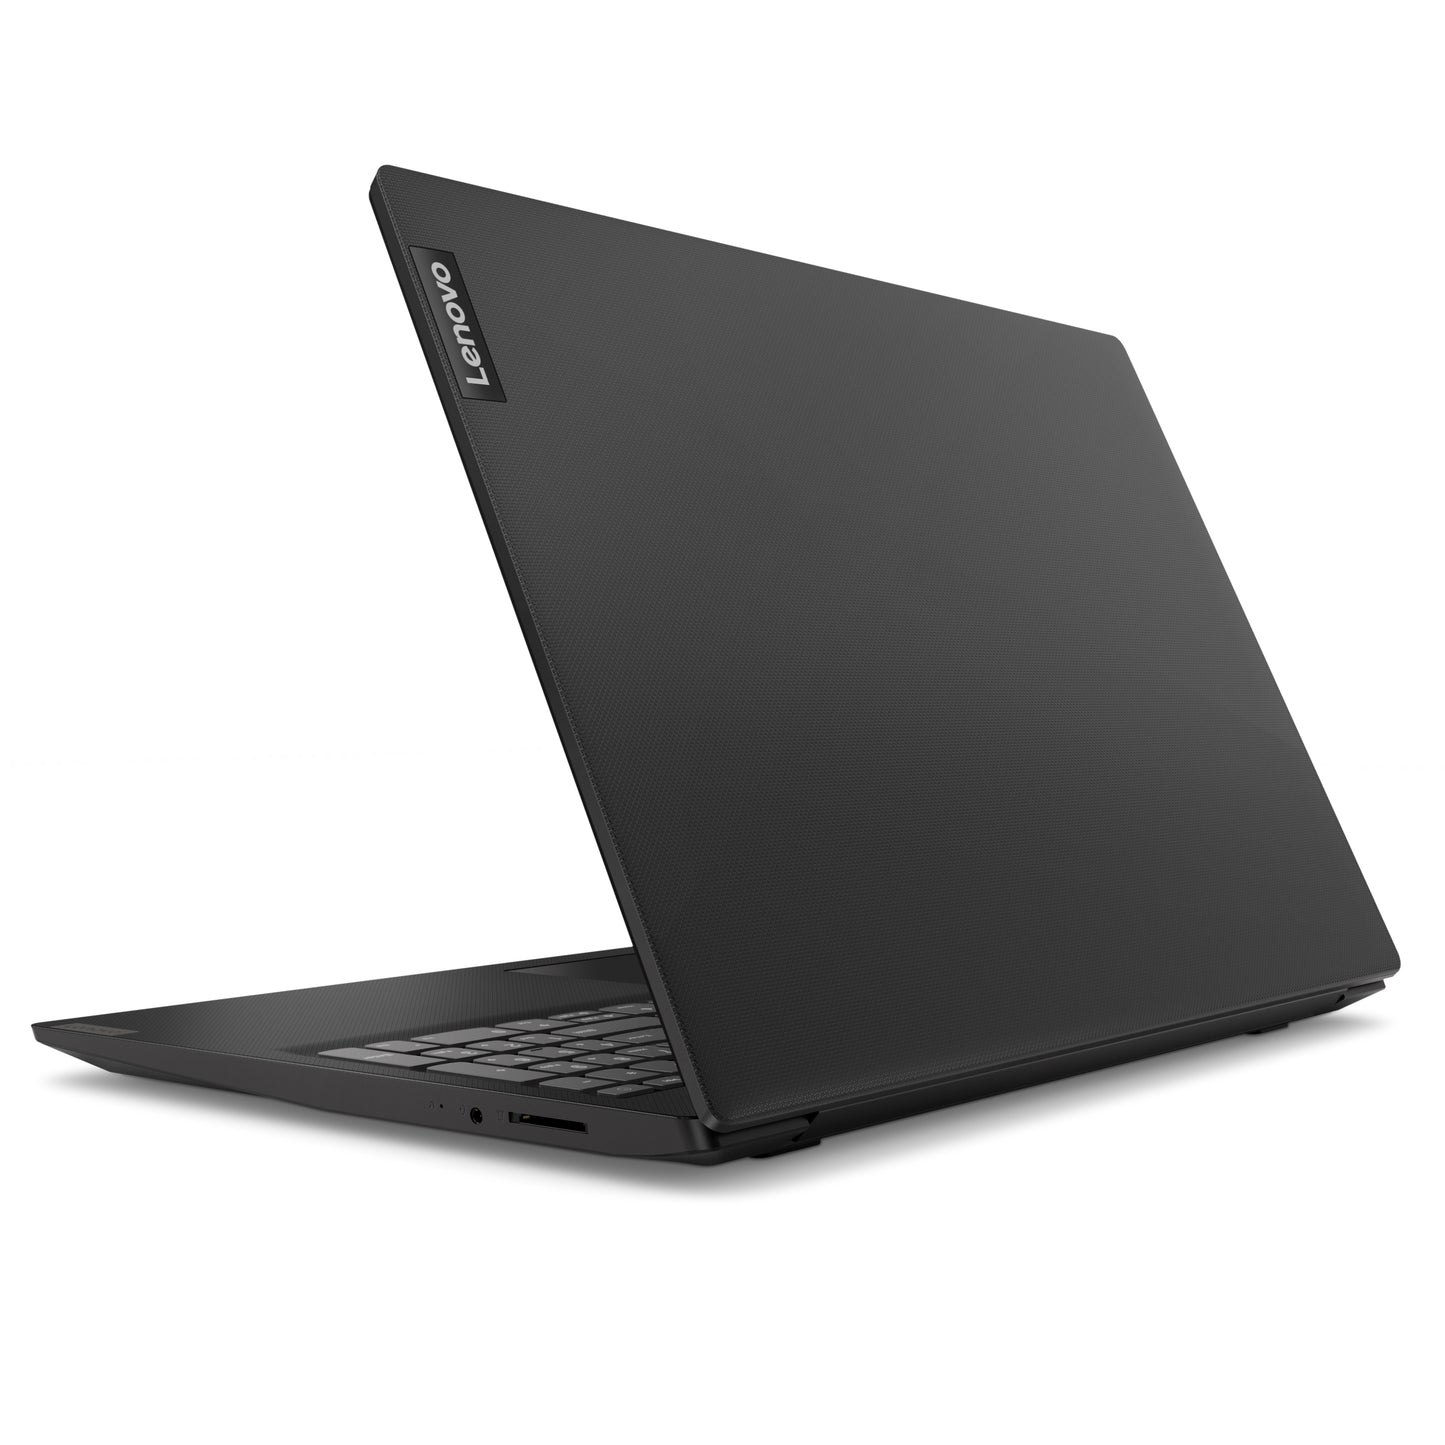 Lenovo ideapad S145 15.6-in Laptop Computer 4GB, 128GB SSD, Windows 10 - Black - 81UT004UUS